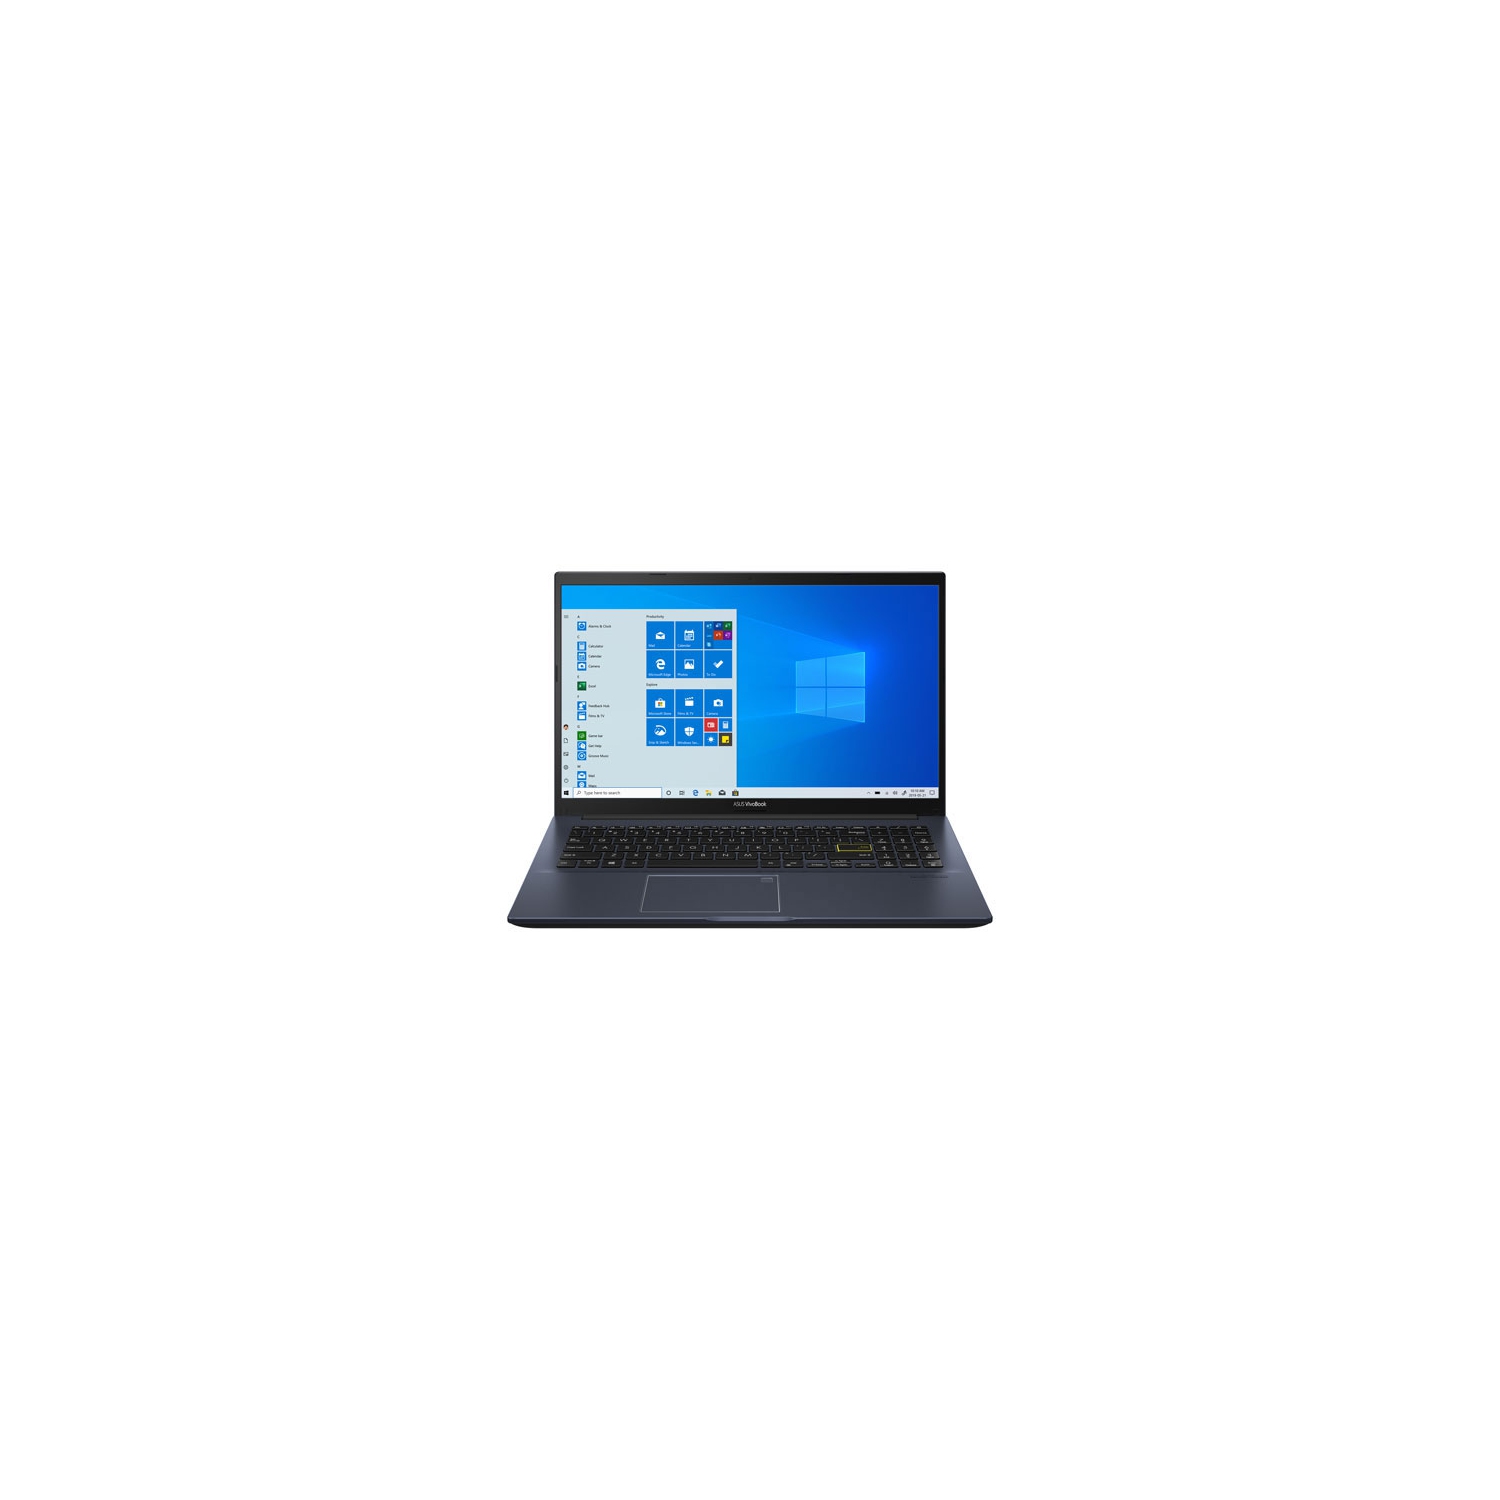 Refurbished (Excellent) - ASUS VivoBook 15.6" Laptop (AMD Ryzen 5 5500U/512GB SSD/12GB RAM/Windows 10)